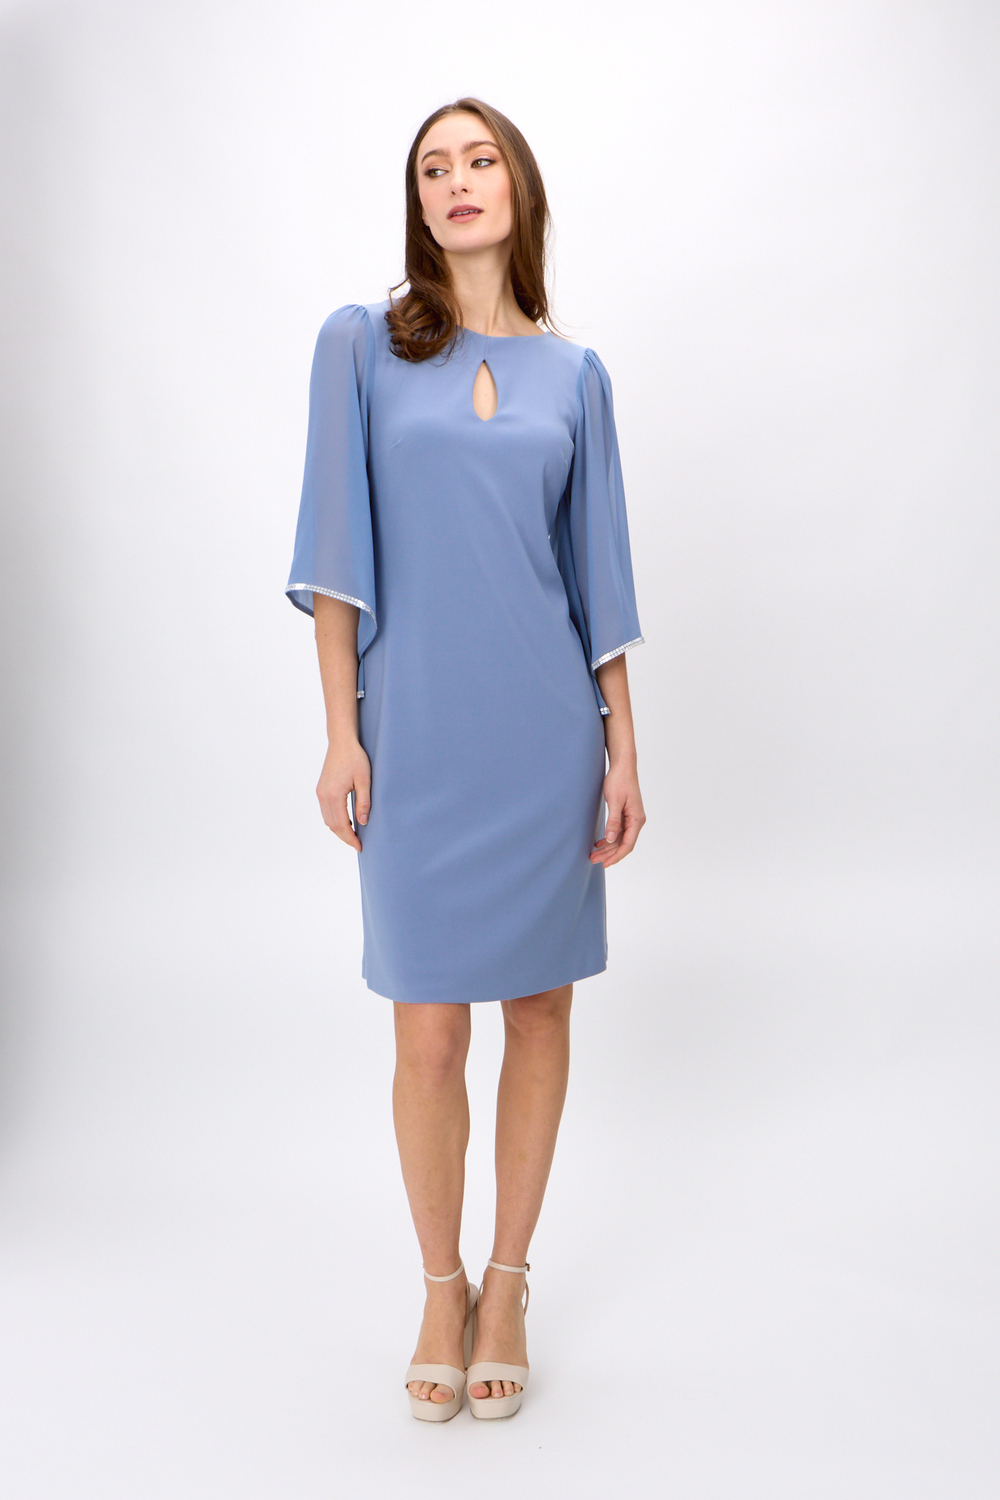 Dress, shiny 3/4 sleeves Model 241709. Serenity Blue